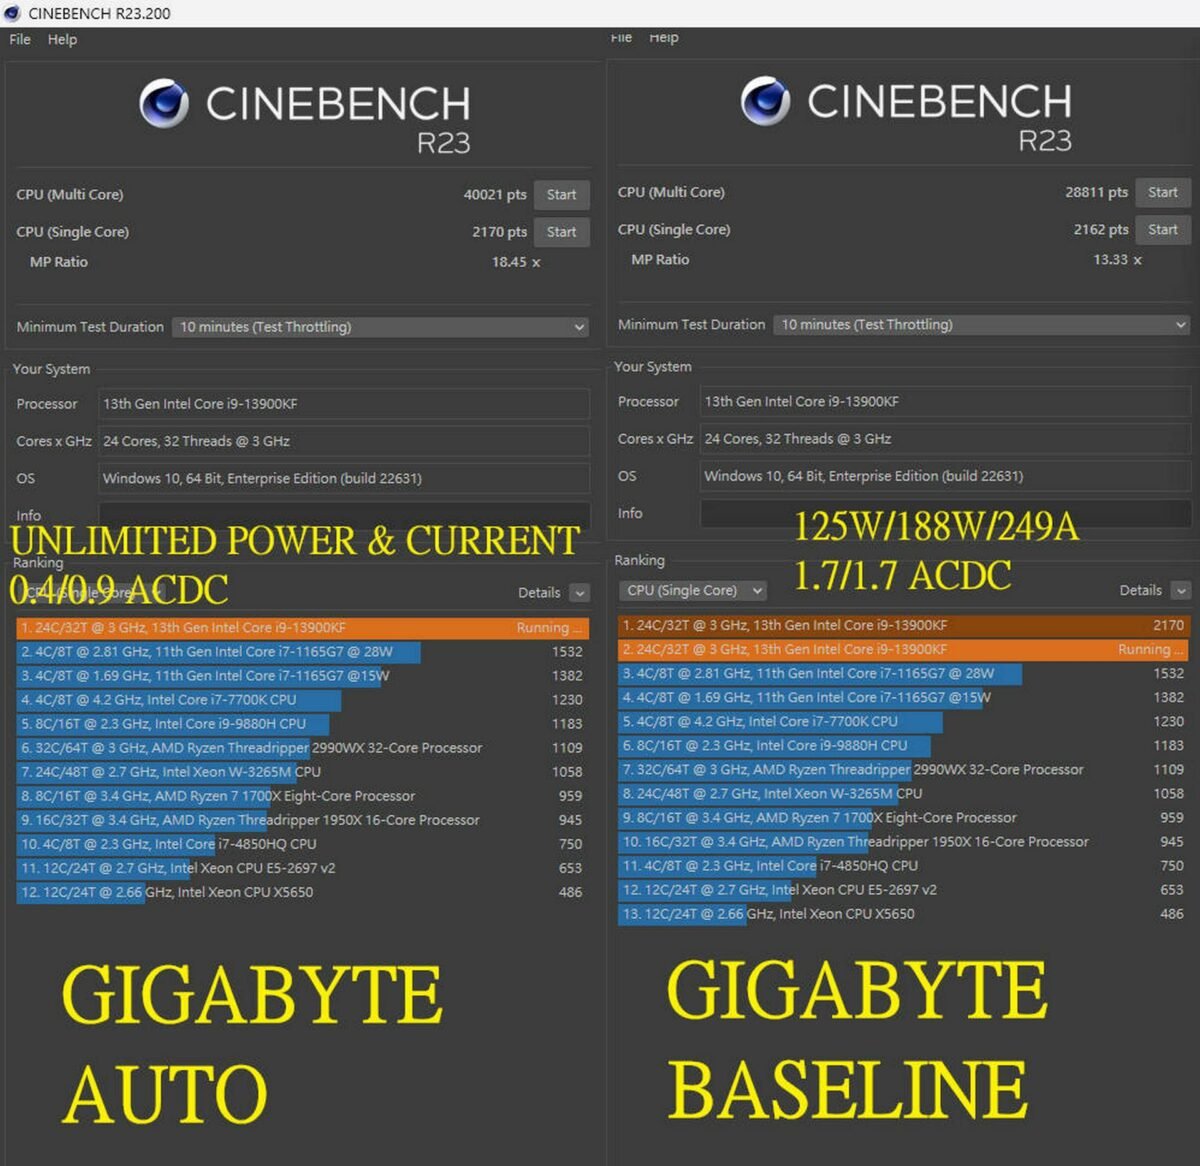 Gigabyte's Auto vs Baseline BIOS setting results in Cinebench R23.